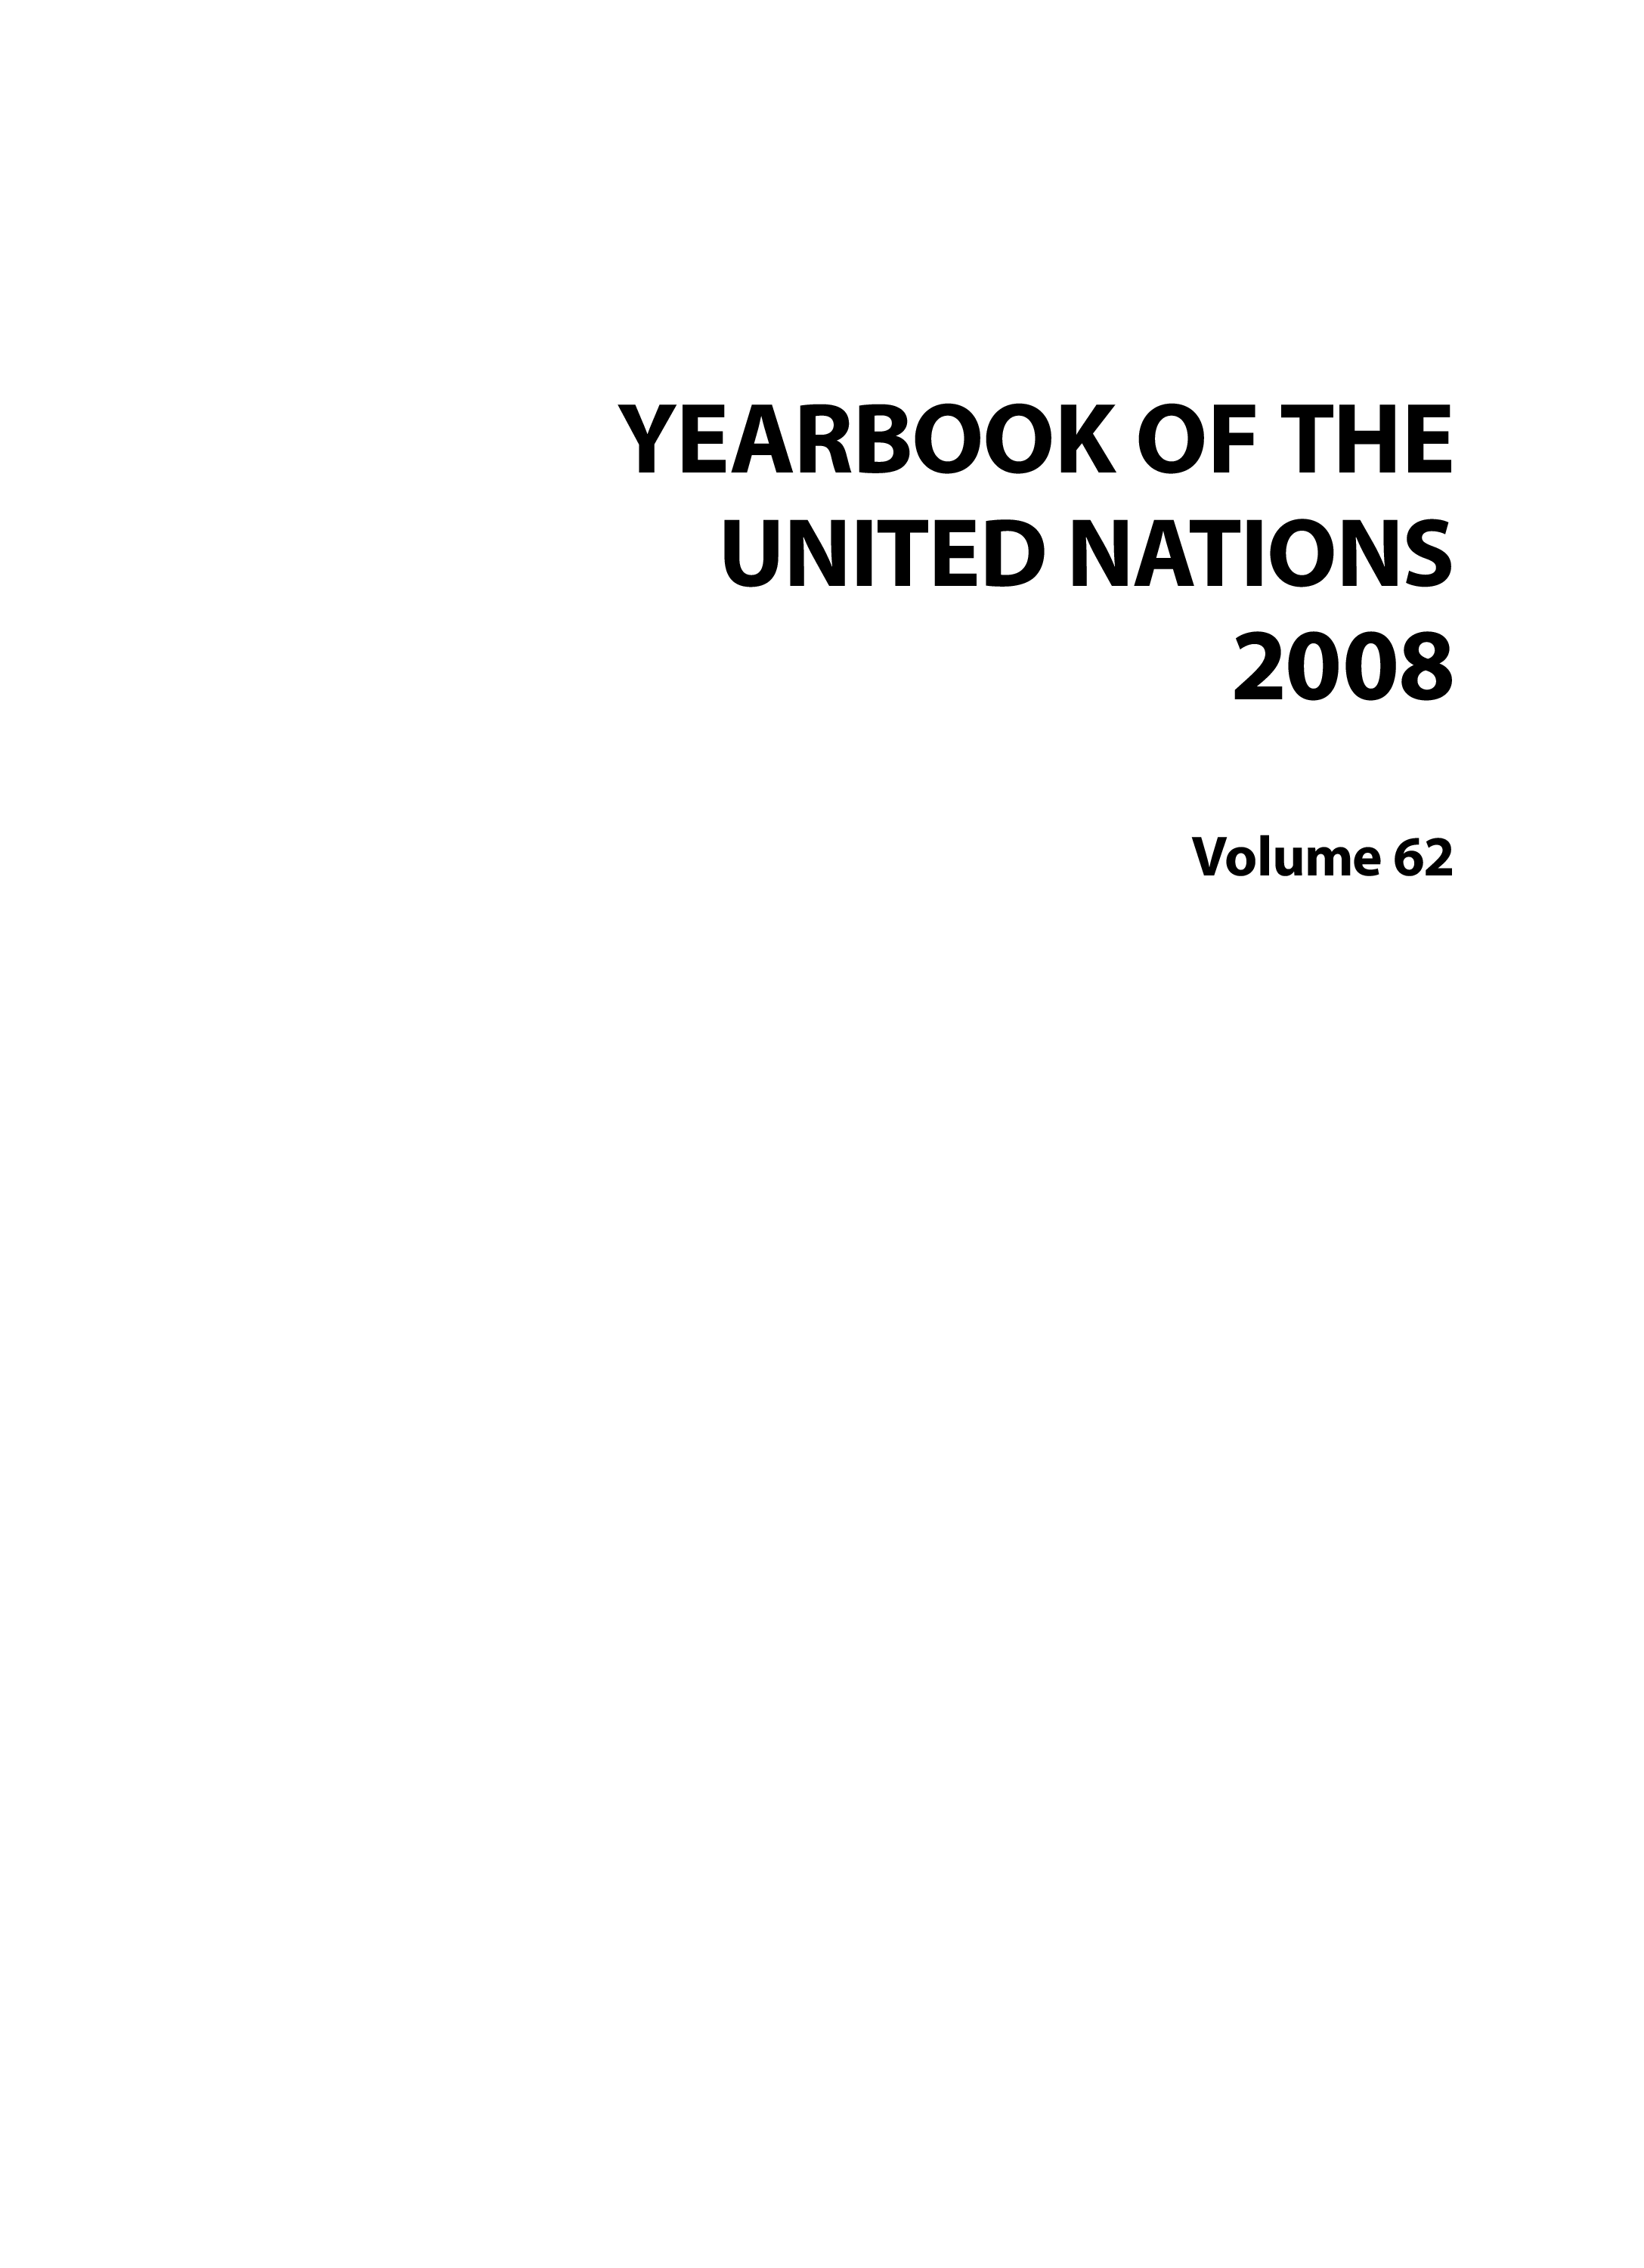 YUN Volume_Page 2008_1